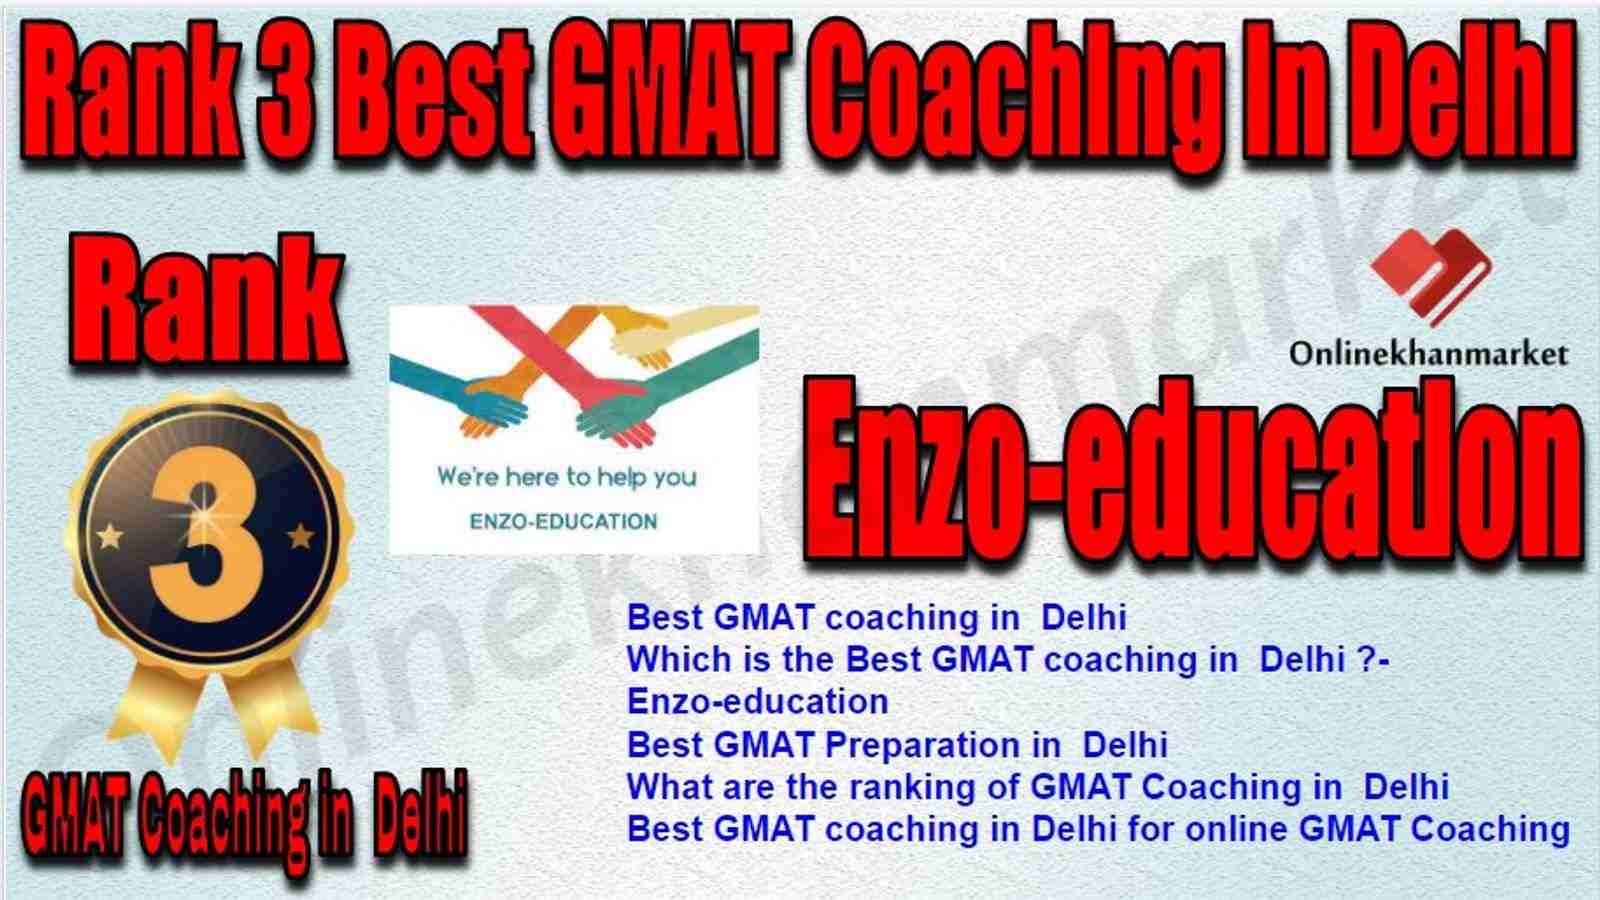 Rank 3 Best GMAT Coaching in Delhi